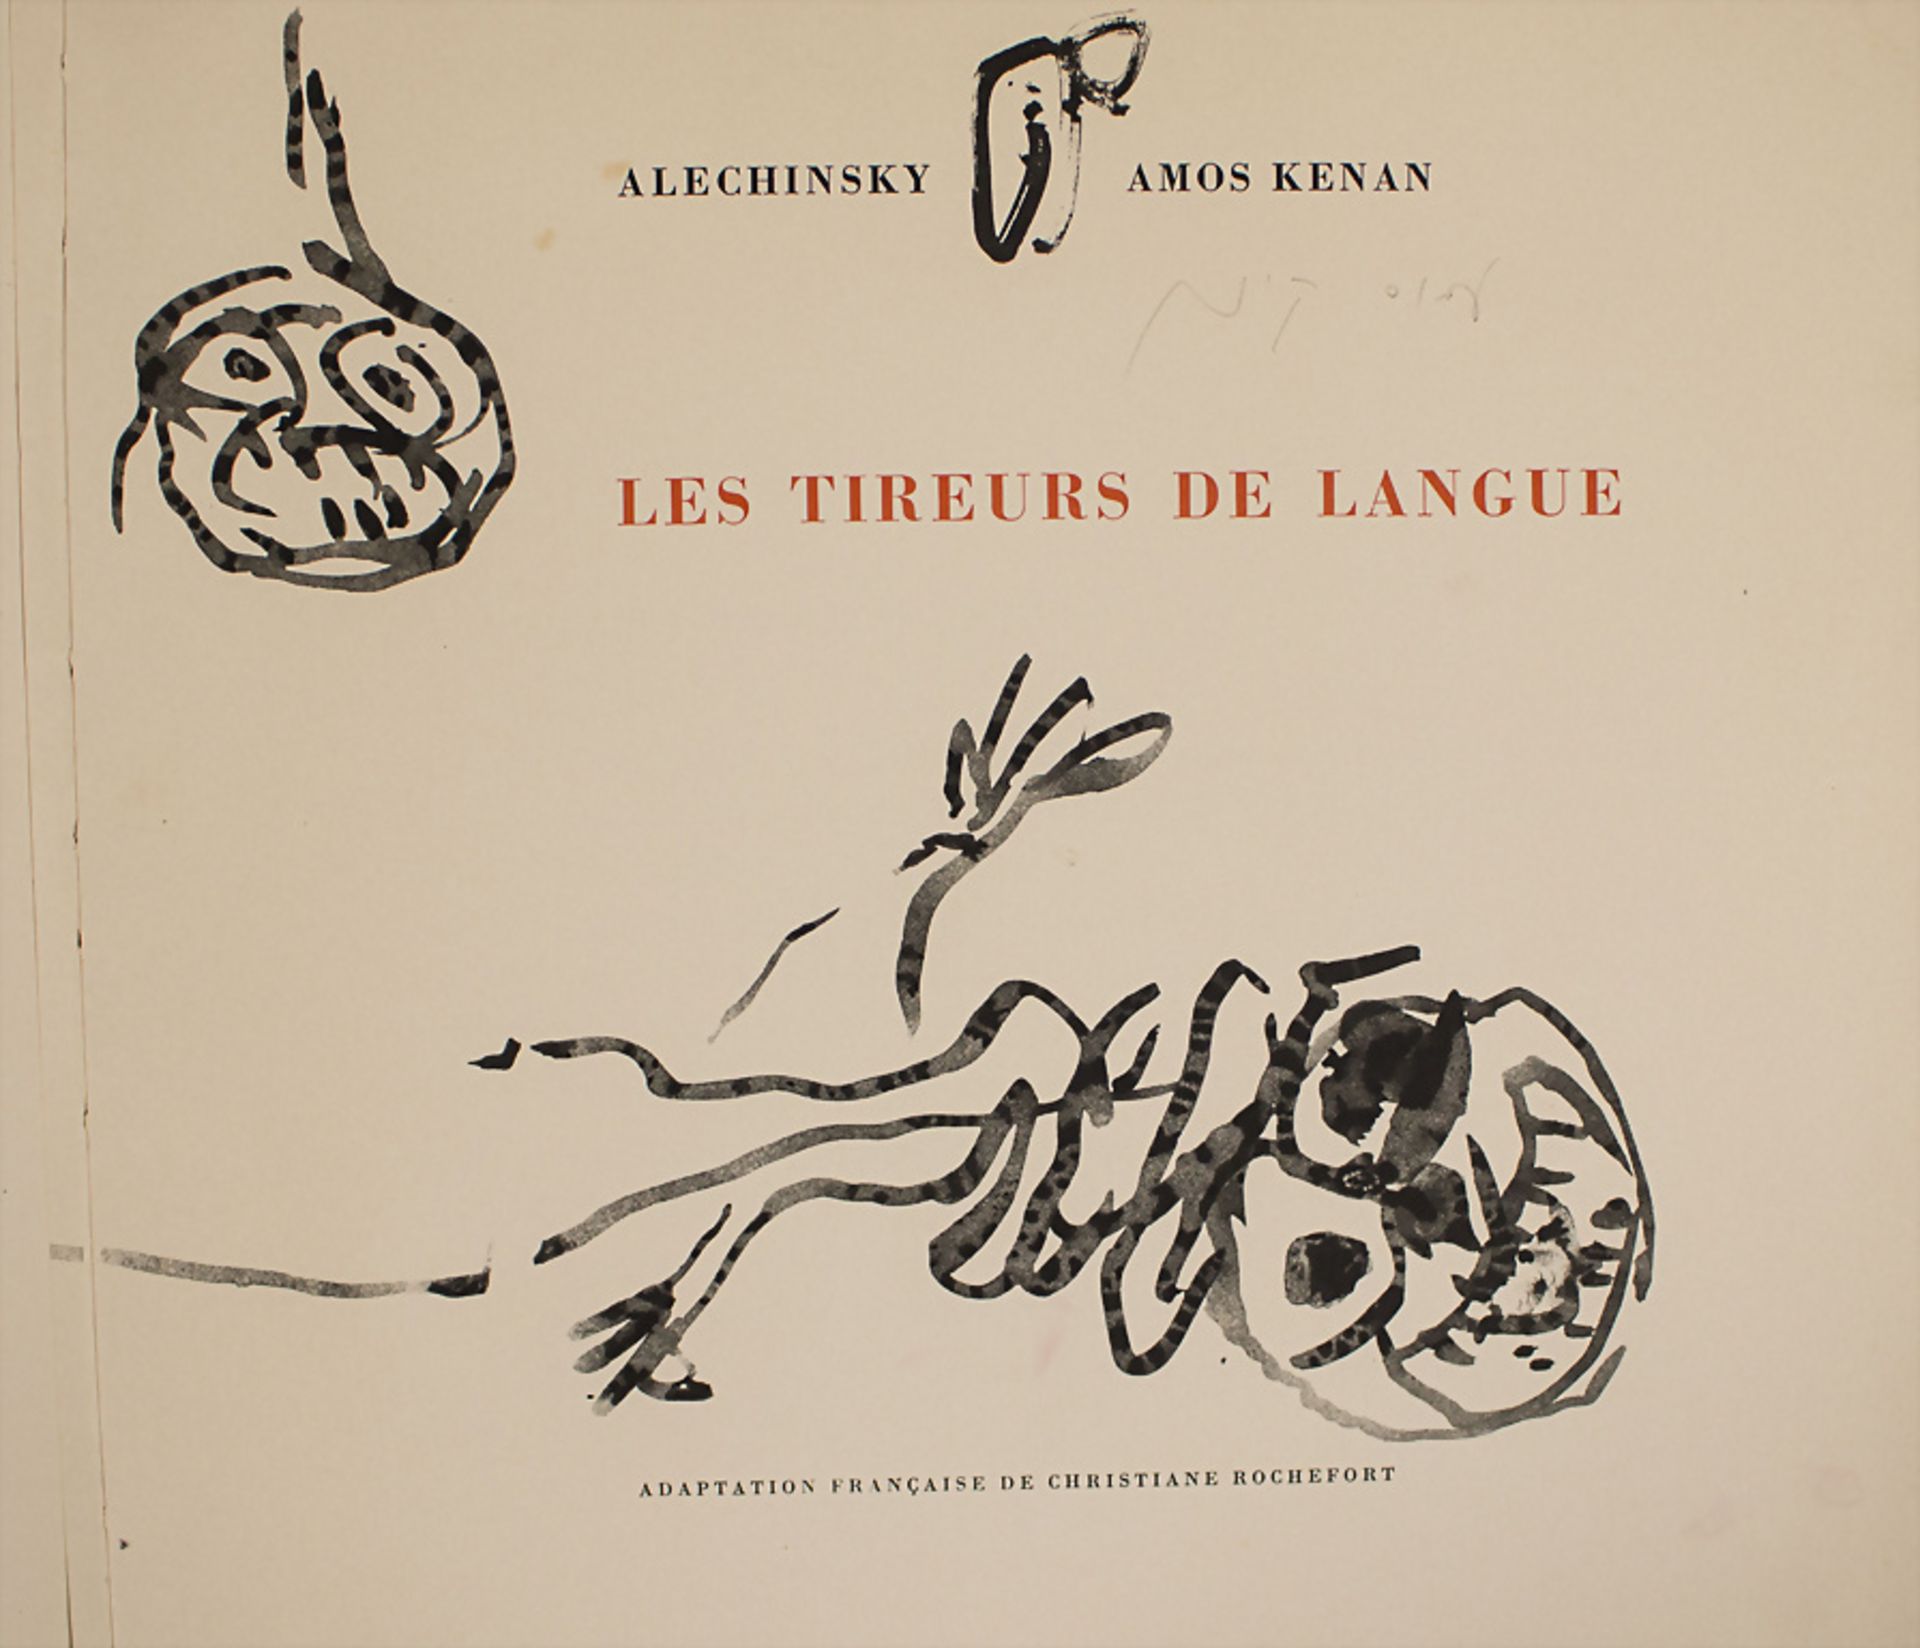 Pierre Alechinsky, Amos Kenan: Les Tireurs de Langue, Turin, 1974 - Image 3 of 6